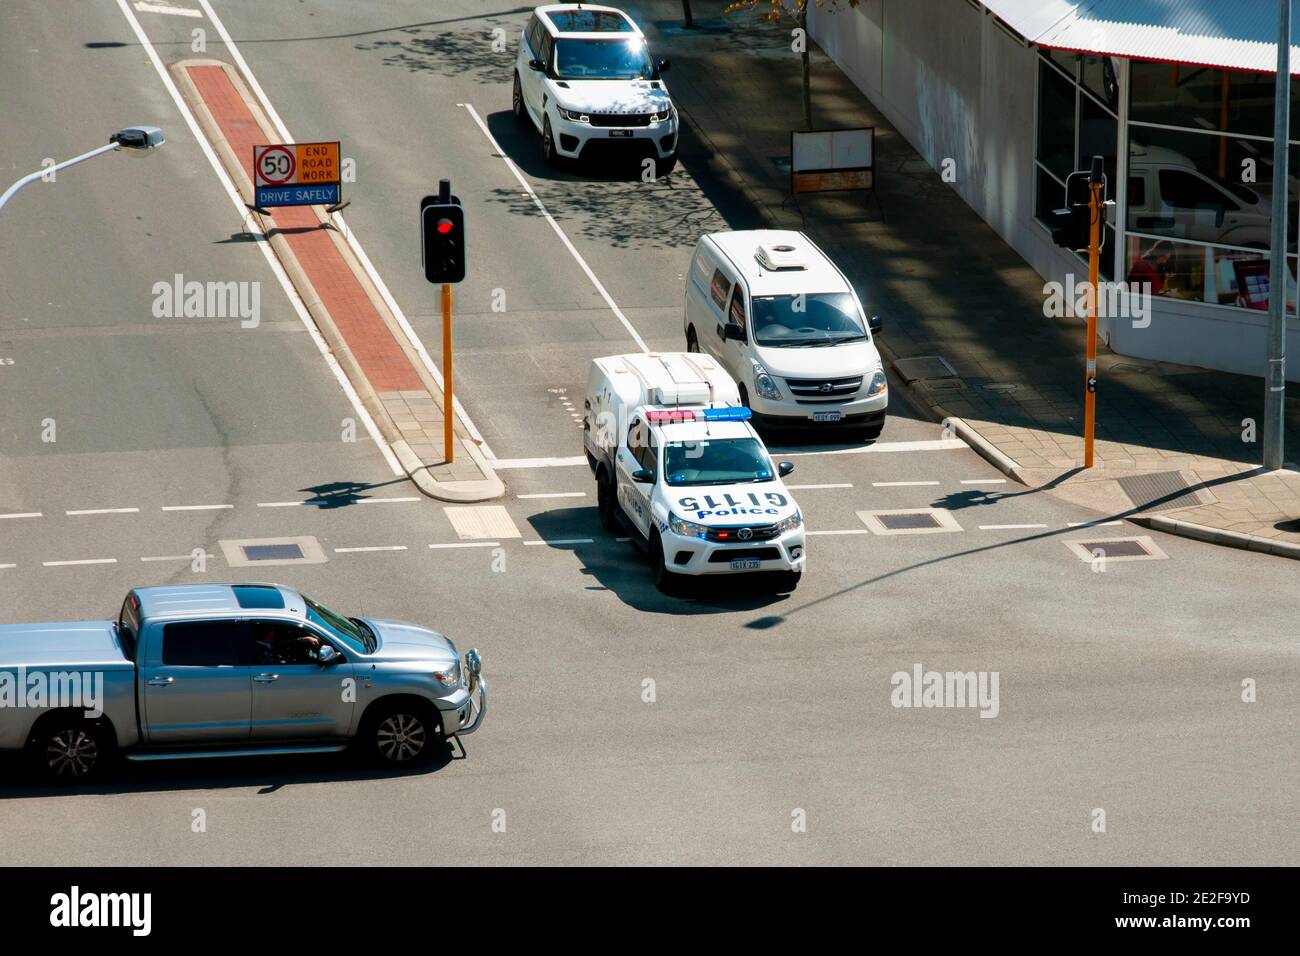 Perth, Australia - September 24, 2020: Western Australian police car in the city Stock Photo